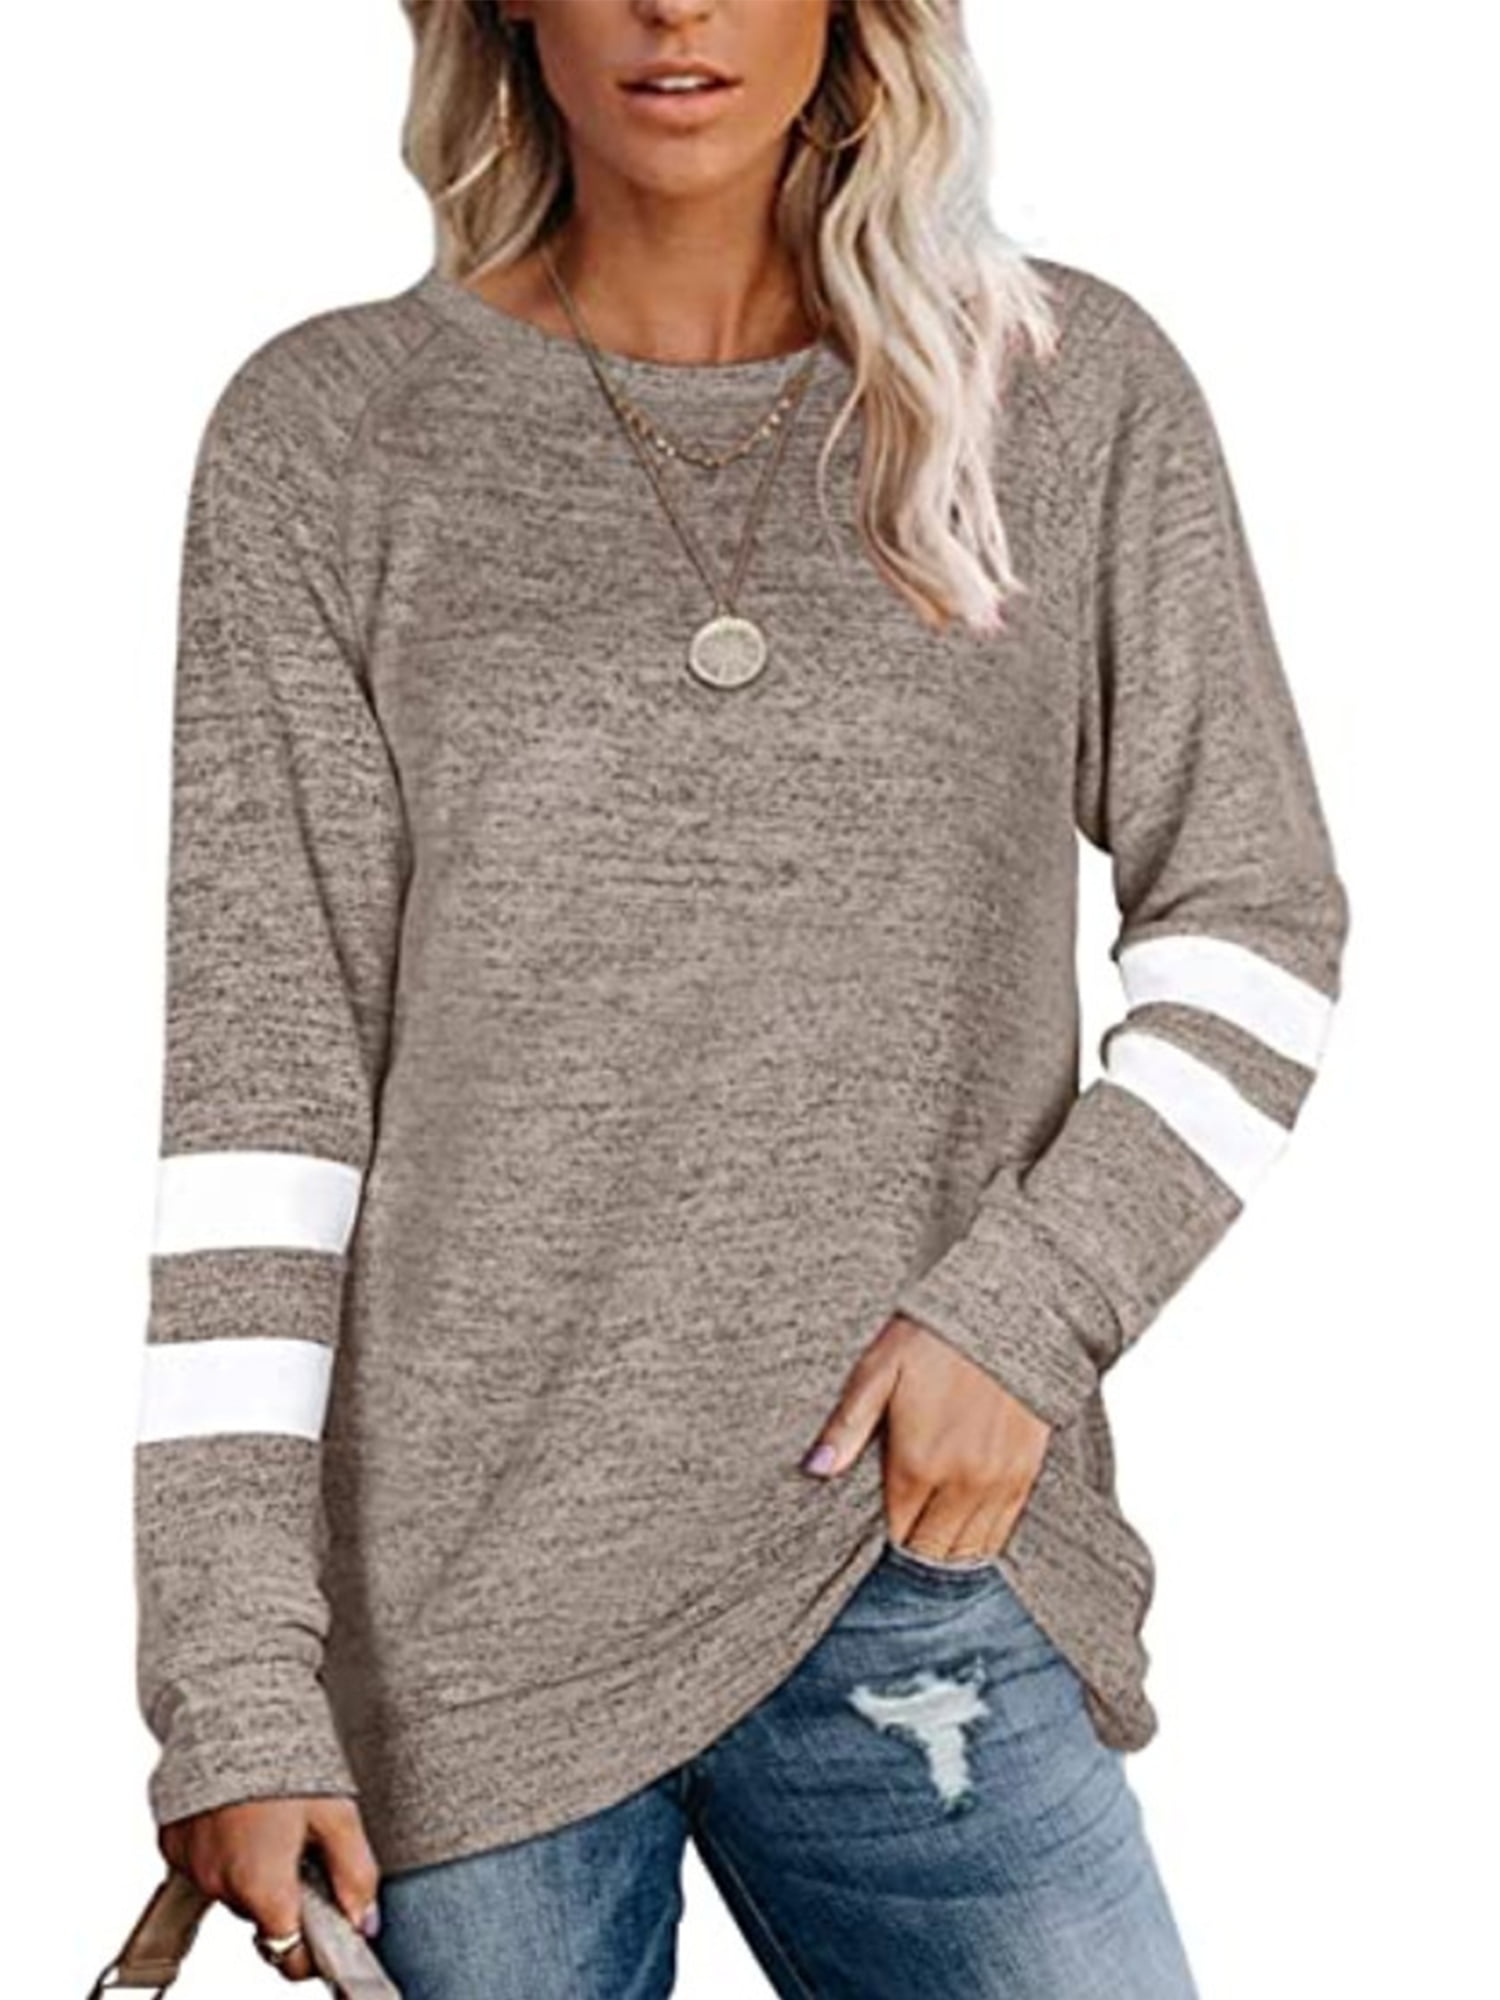 Asvivid Casual Long Sleeve Sweatshirt for Women Solid Crewneck Pullover Tops Loose Tunic Tee Shirts 